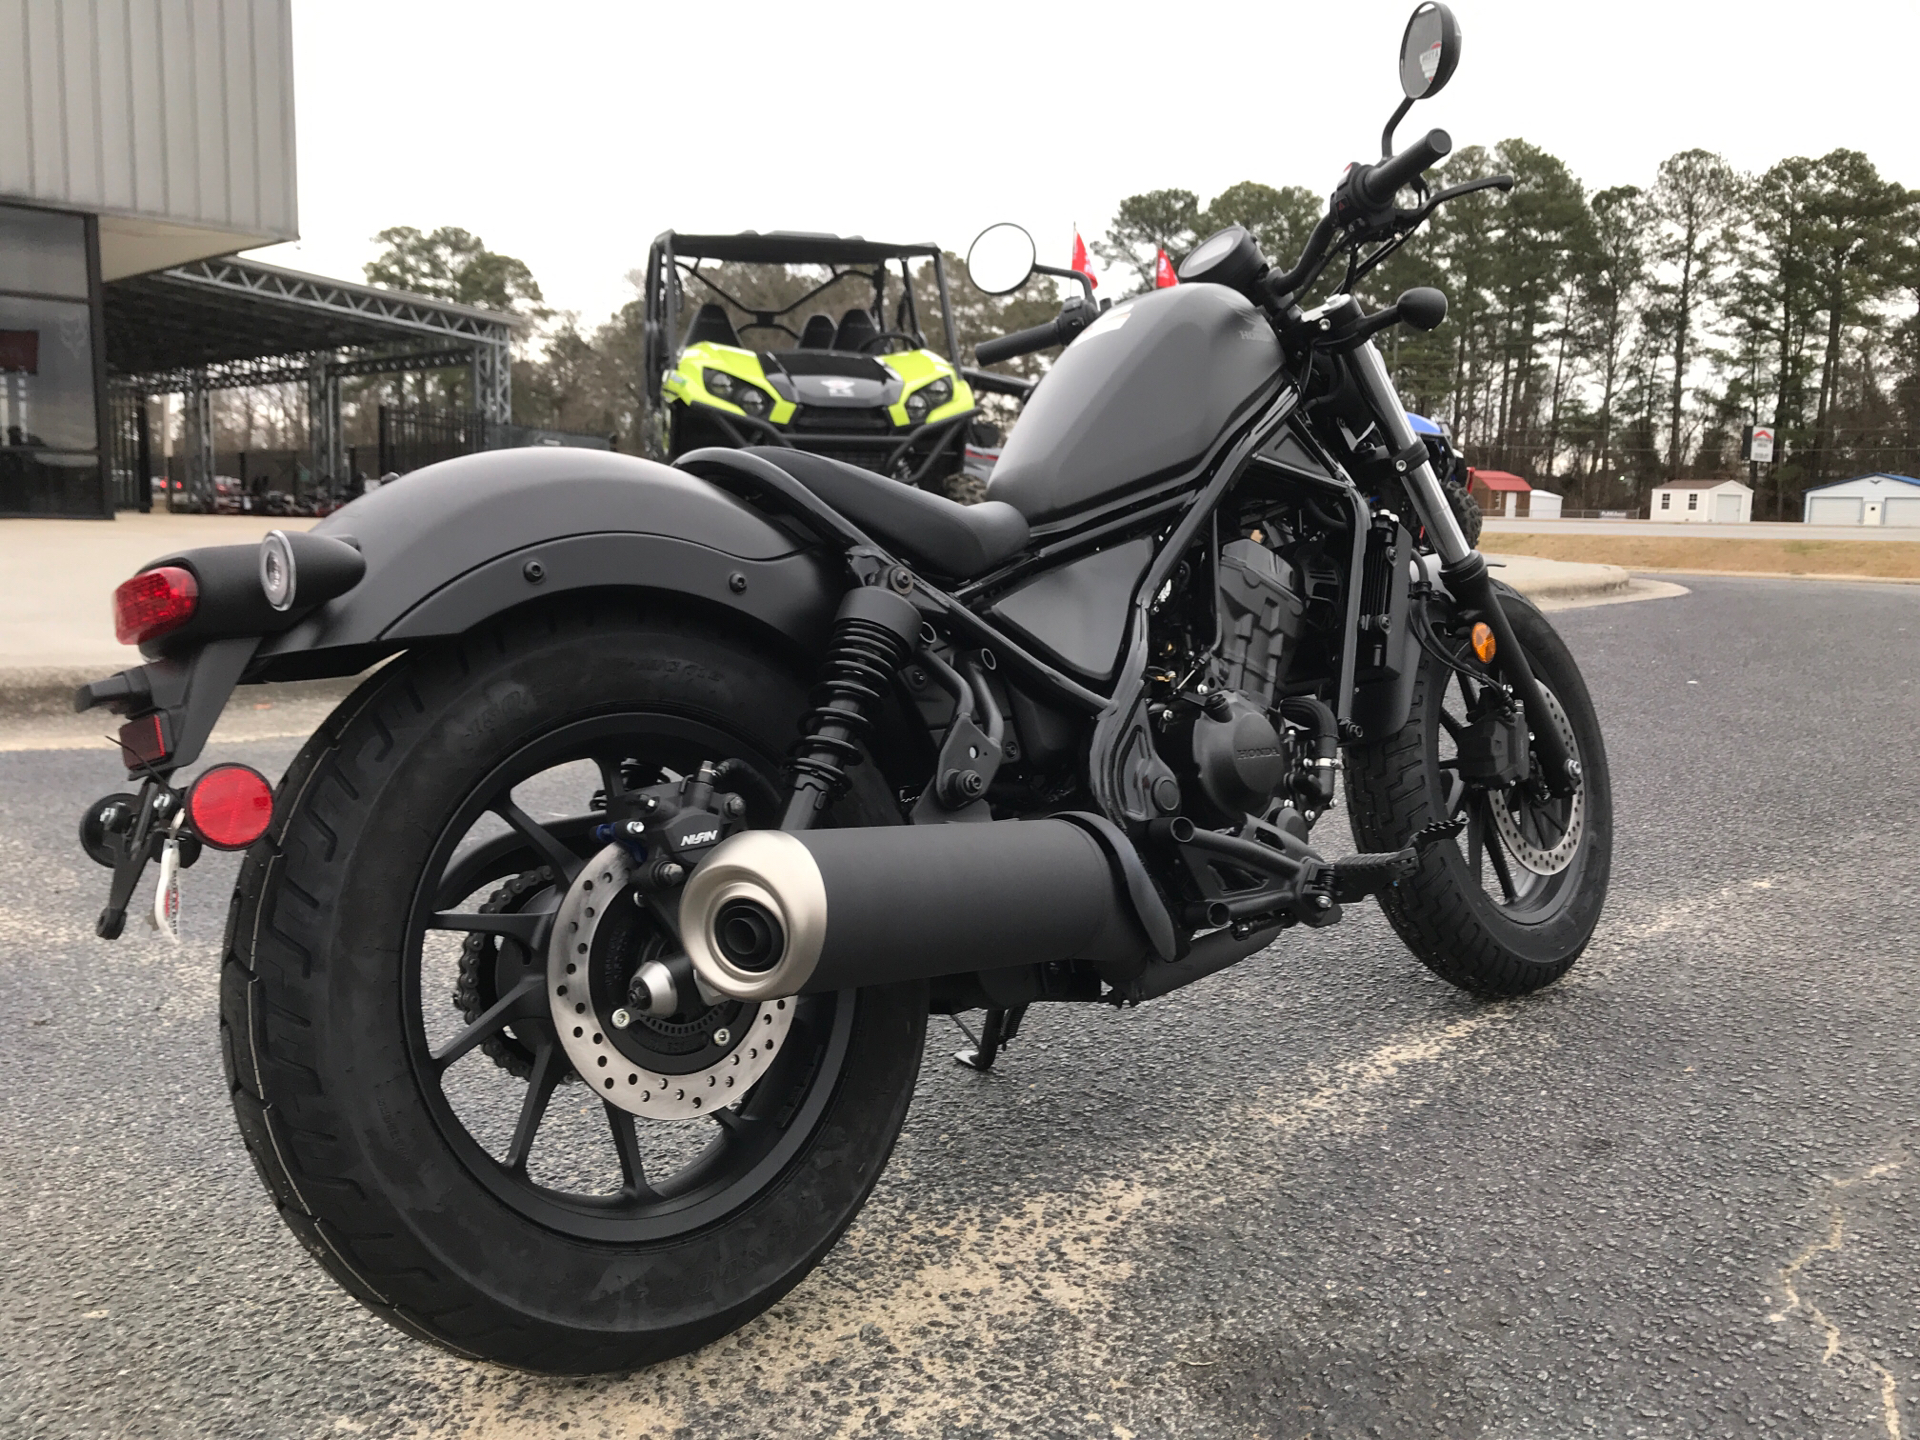 2021 Honda Rebel 300 ABS in Greenville, North Carolina - Photo 8